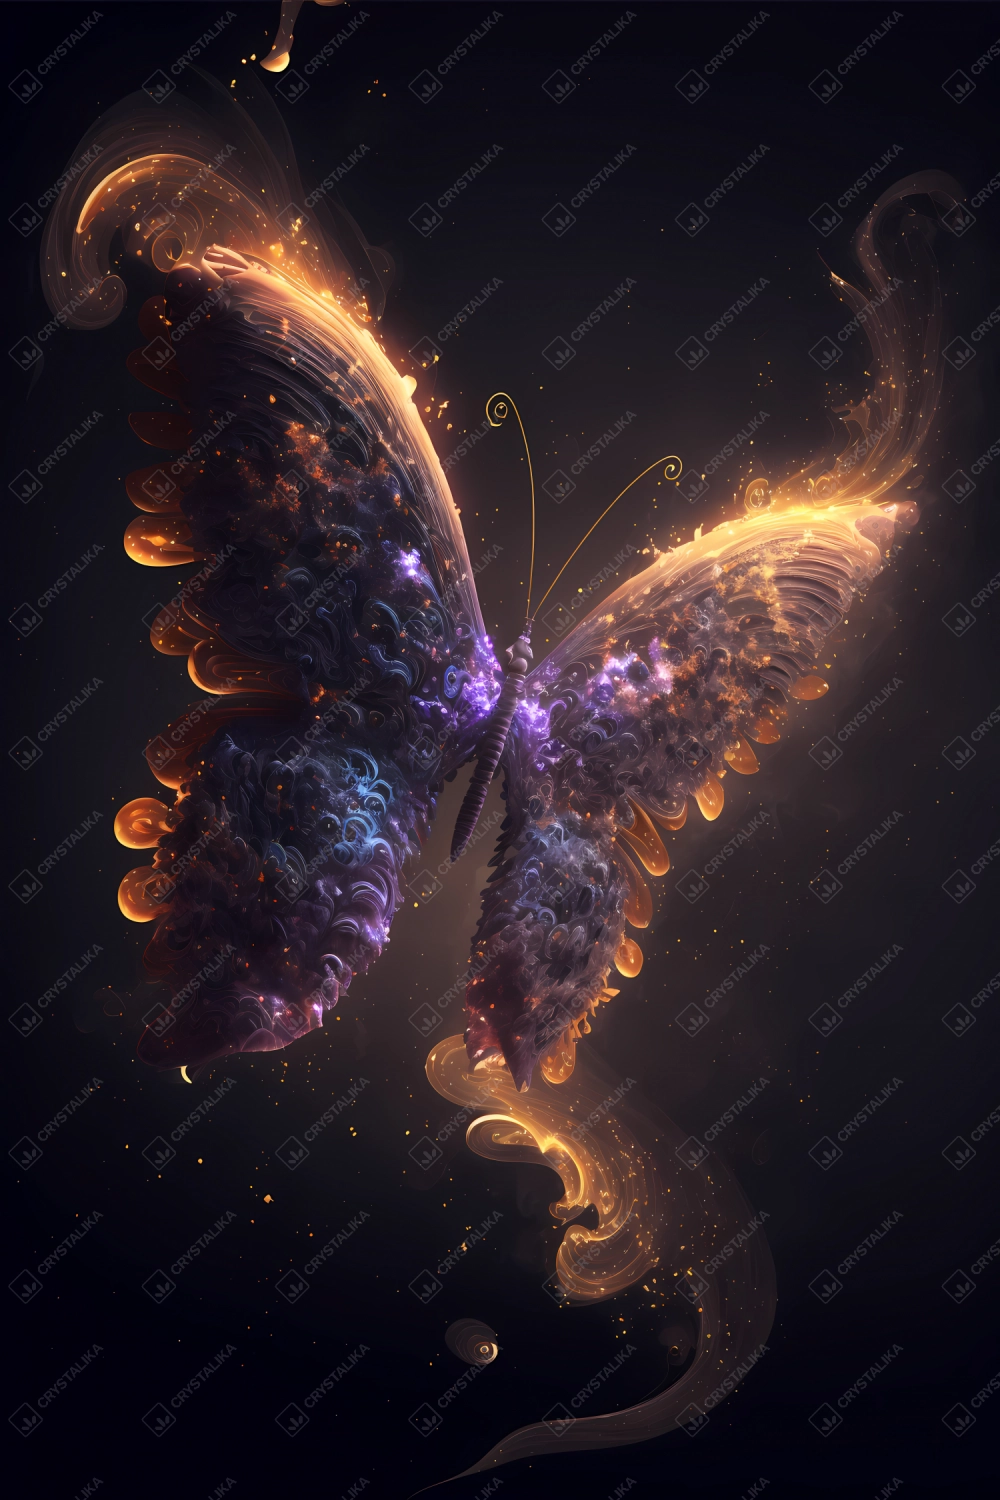 Spirit animal - Butterfly